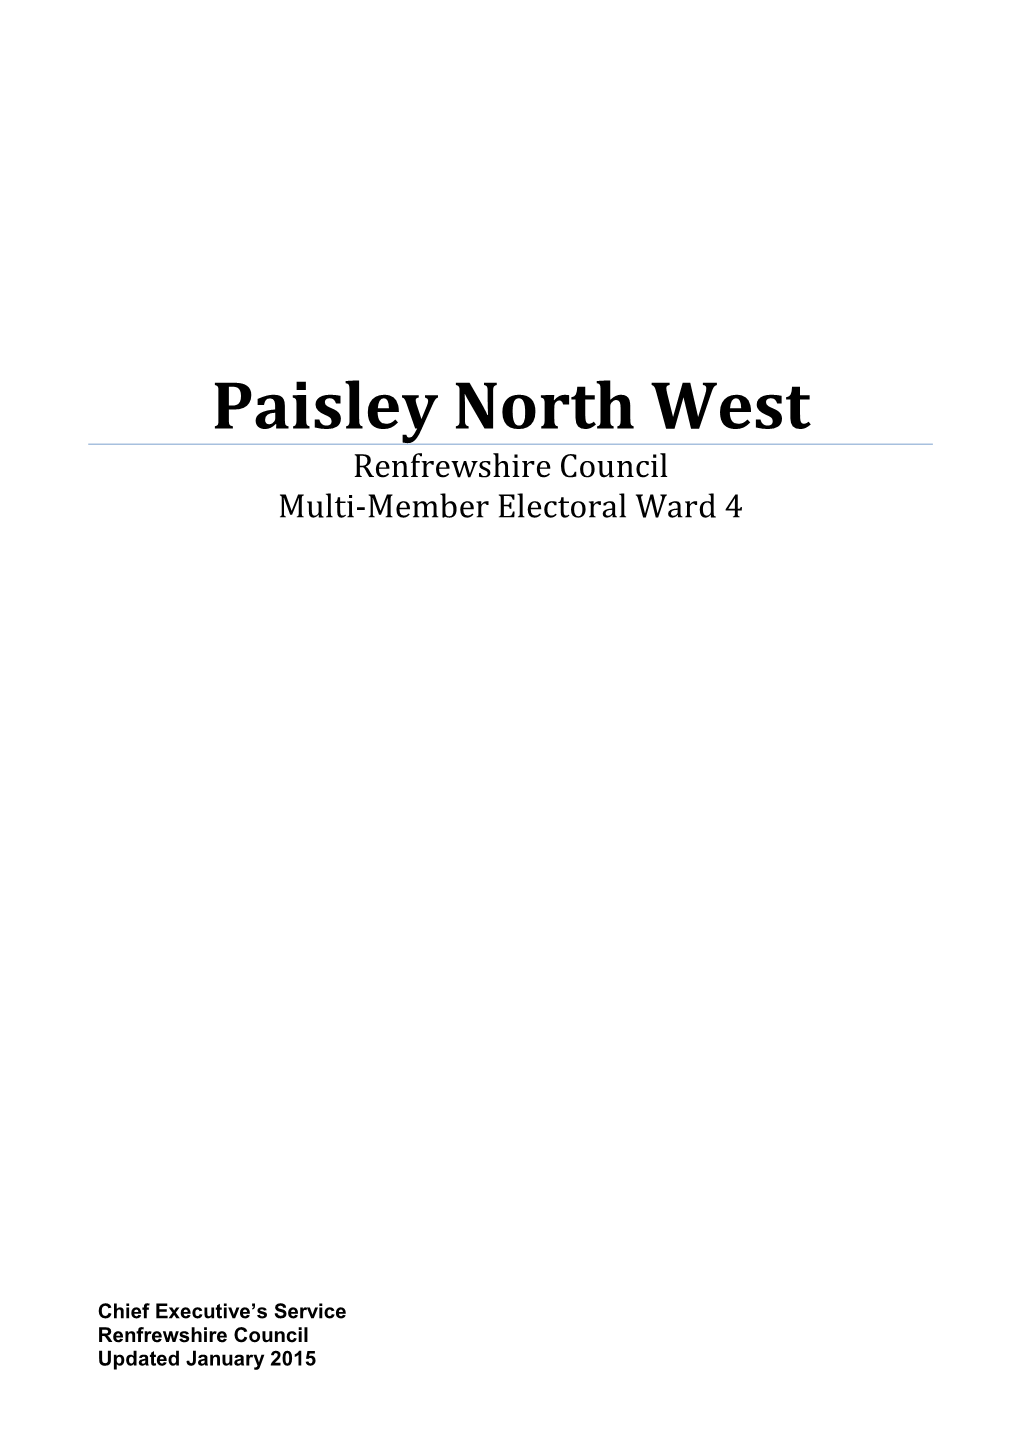 Paisley North West Renfrewshire Council Multi-Member Electoral Ward 4